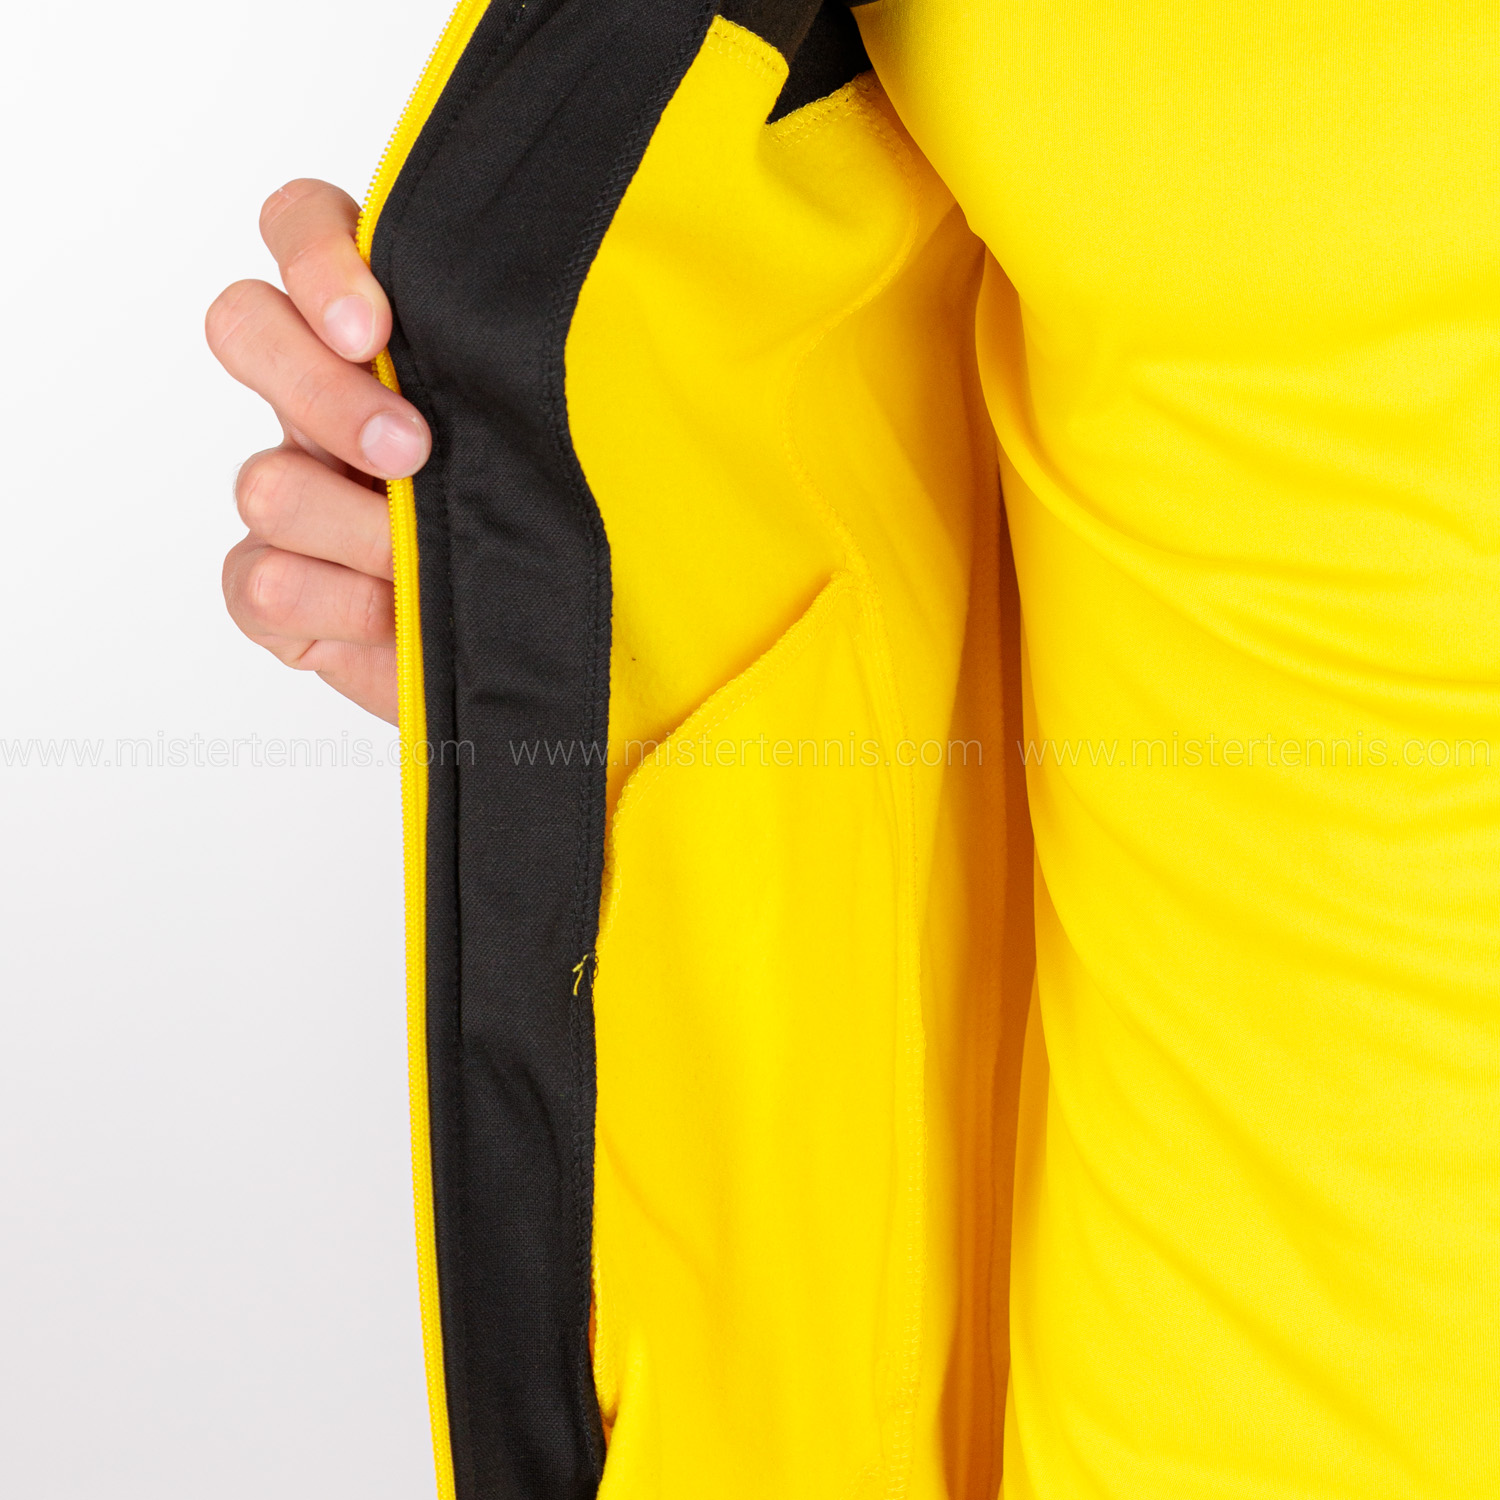 Joma Winner Jacket - Yellow/Black